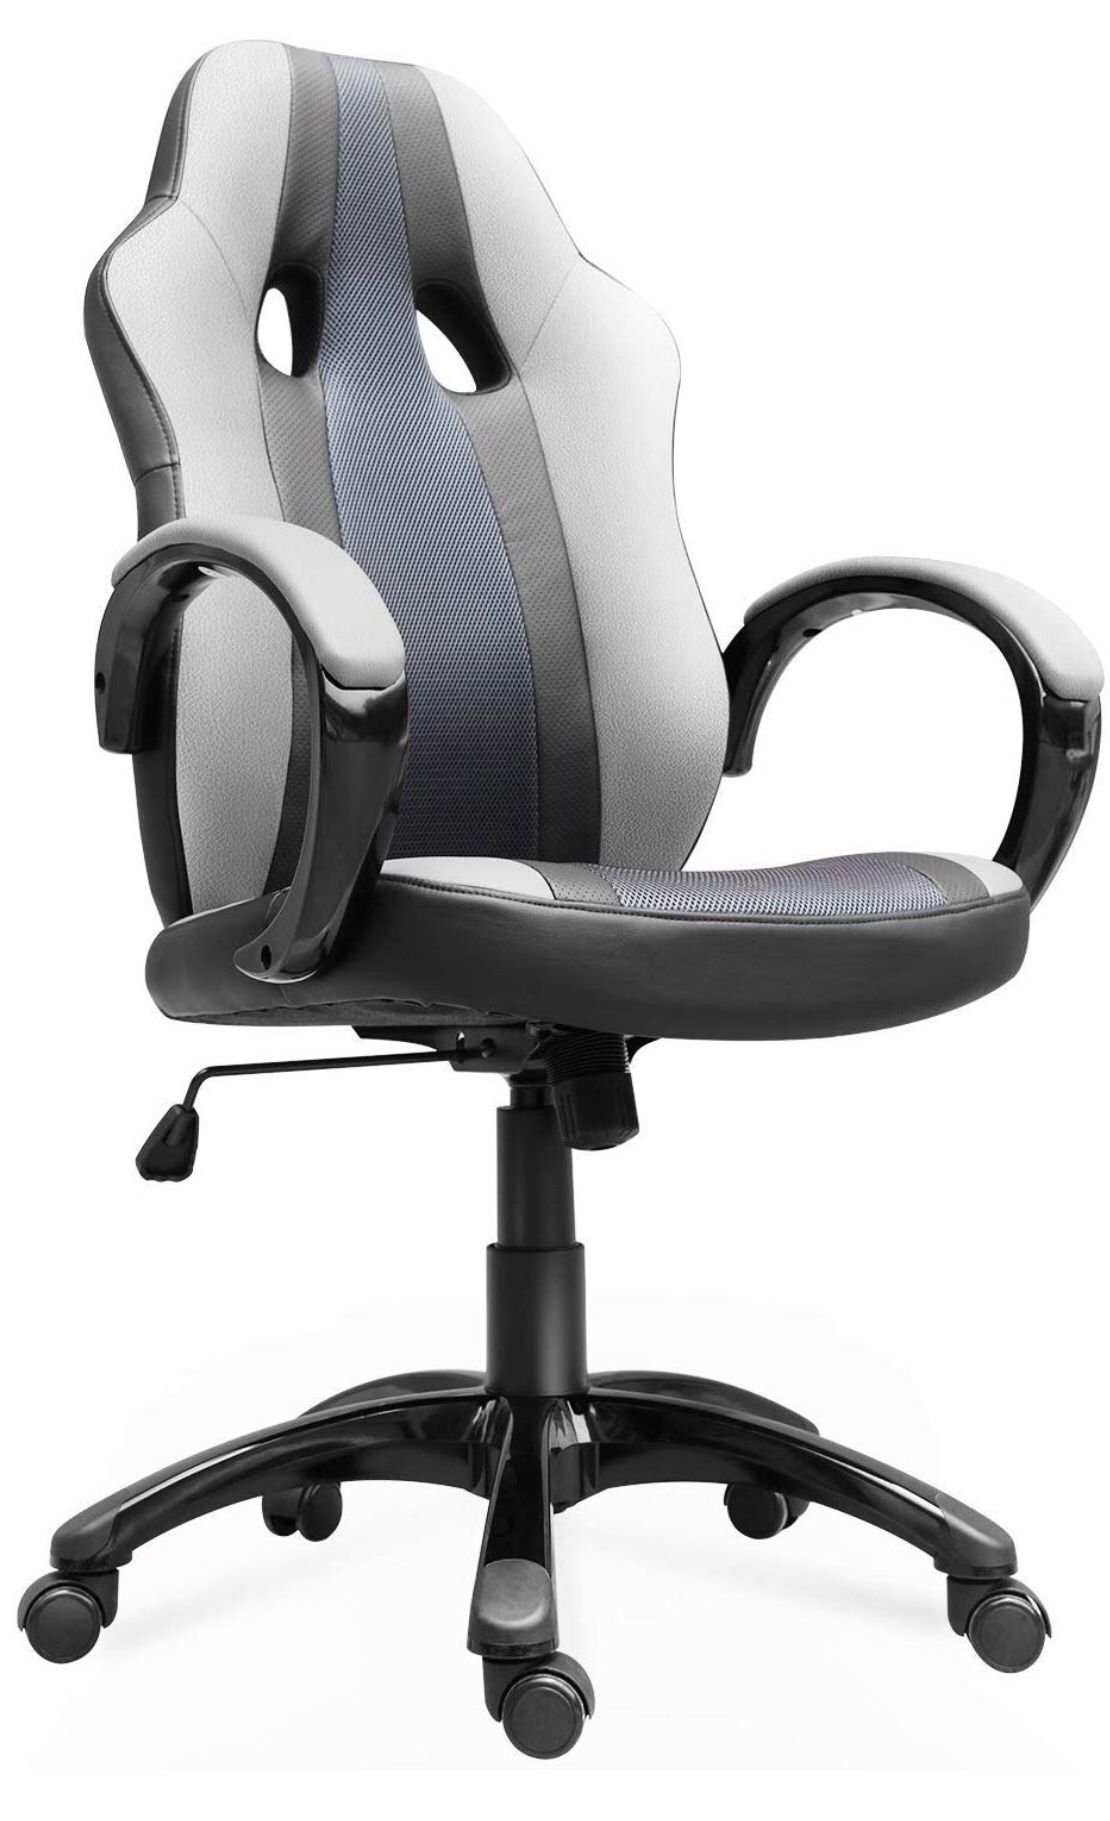 Office chair / revolving chair